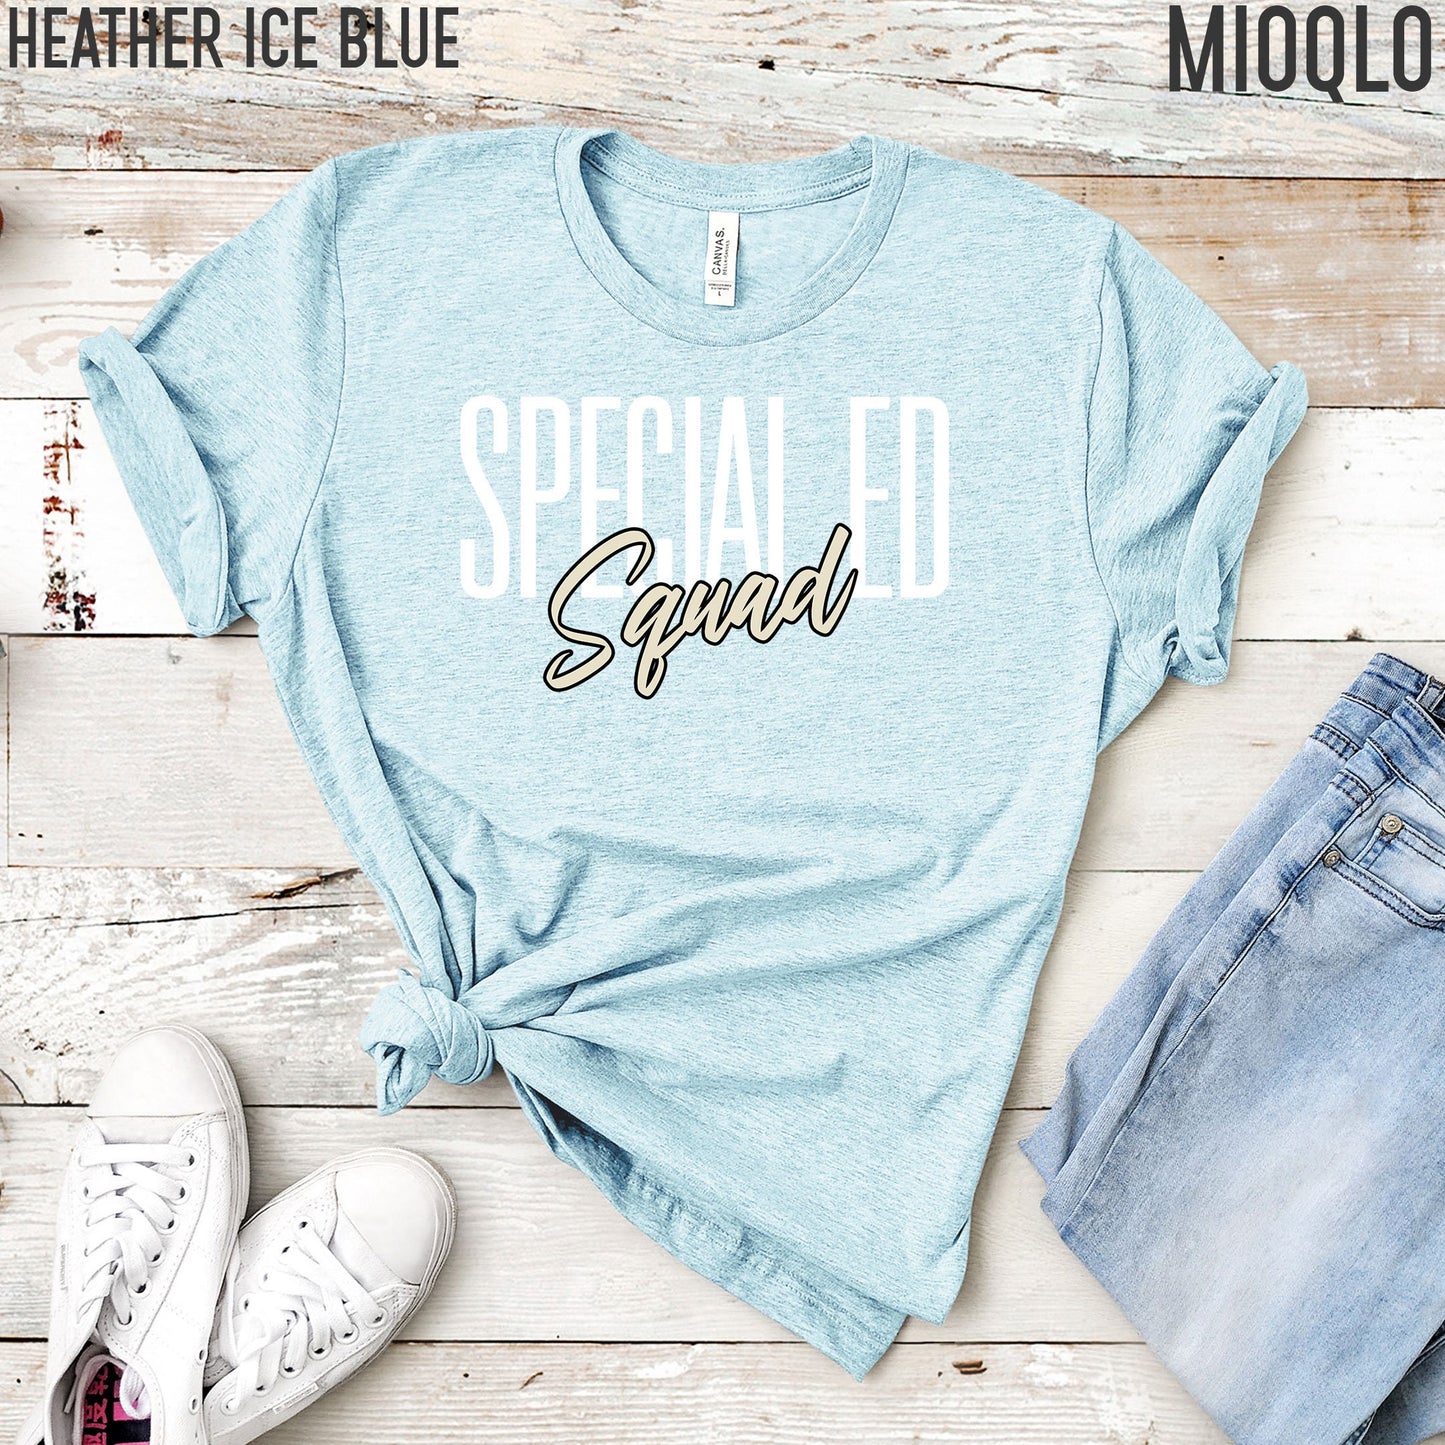 Spec Ed Squad Shirt, Teacher Team School Spirit Shirt, Special Education Gift, Special Ed Teacher, Special Ed Tee, Gift for SPEDucator Crew